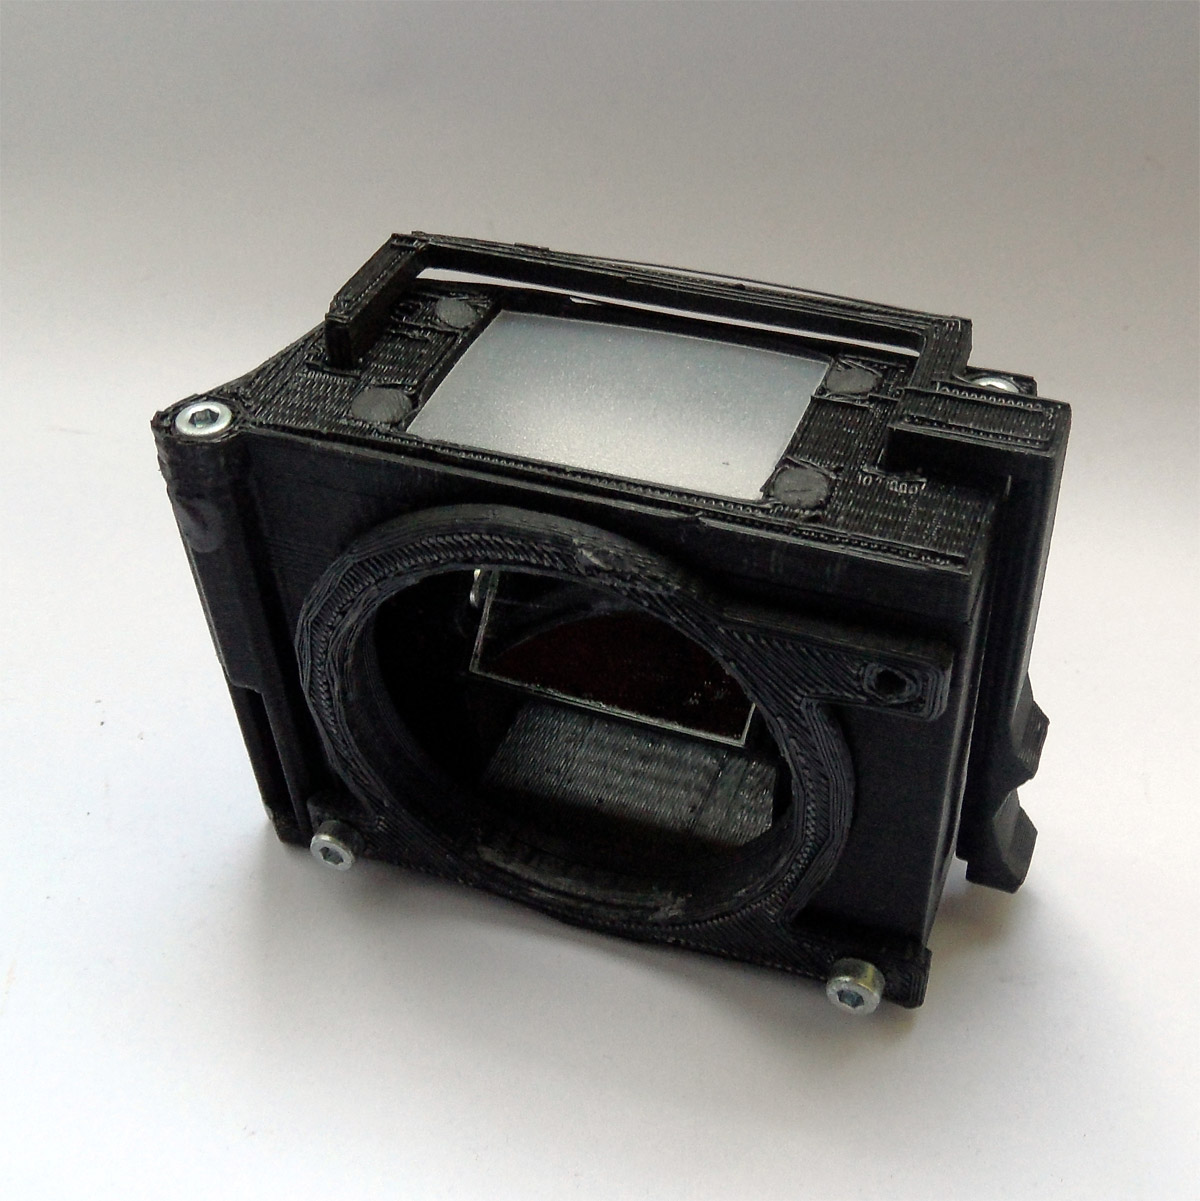 OpenReflex 3D Printer 35mm SLR Camera - Viewfinder Assembly